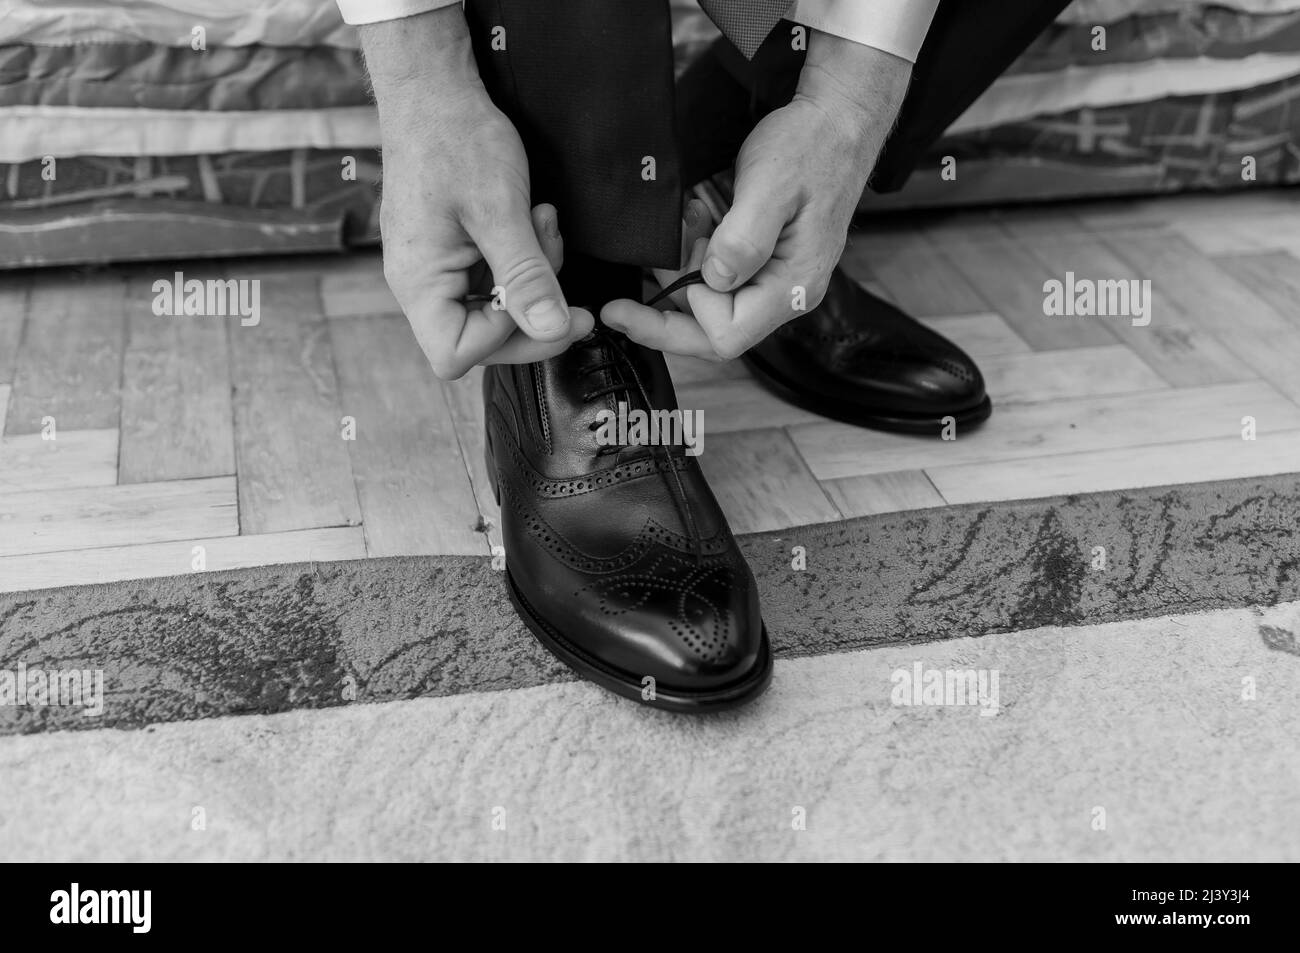 Man tying shoelaces on leather shoes Stock Photo